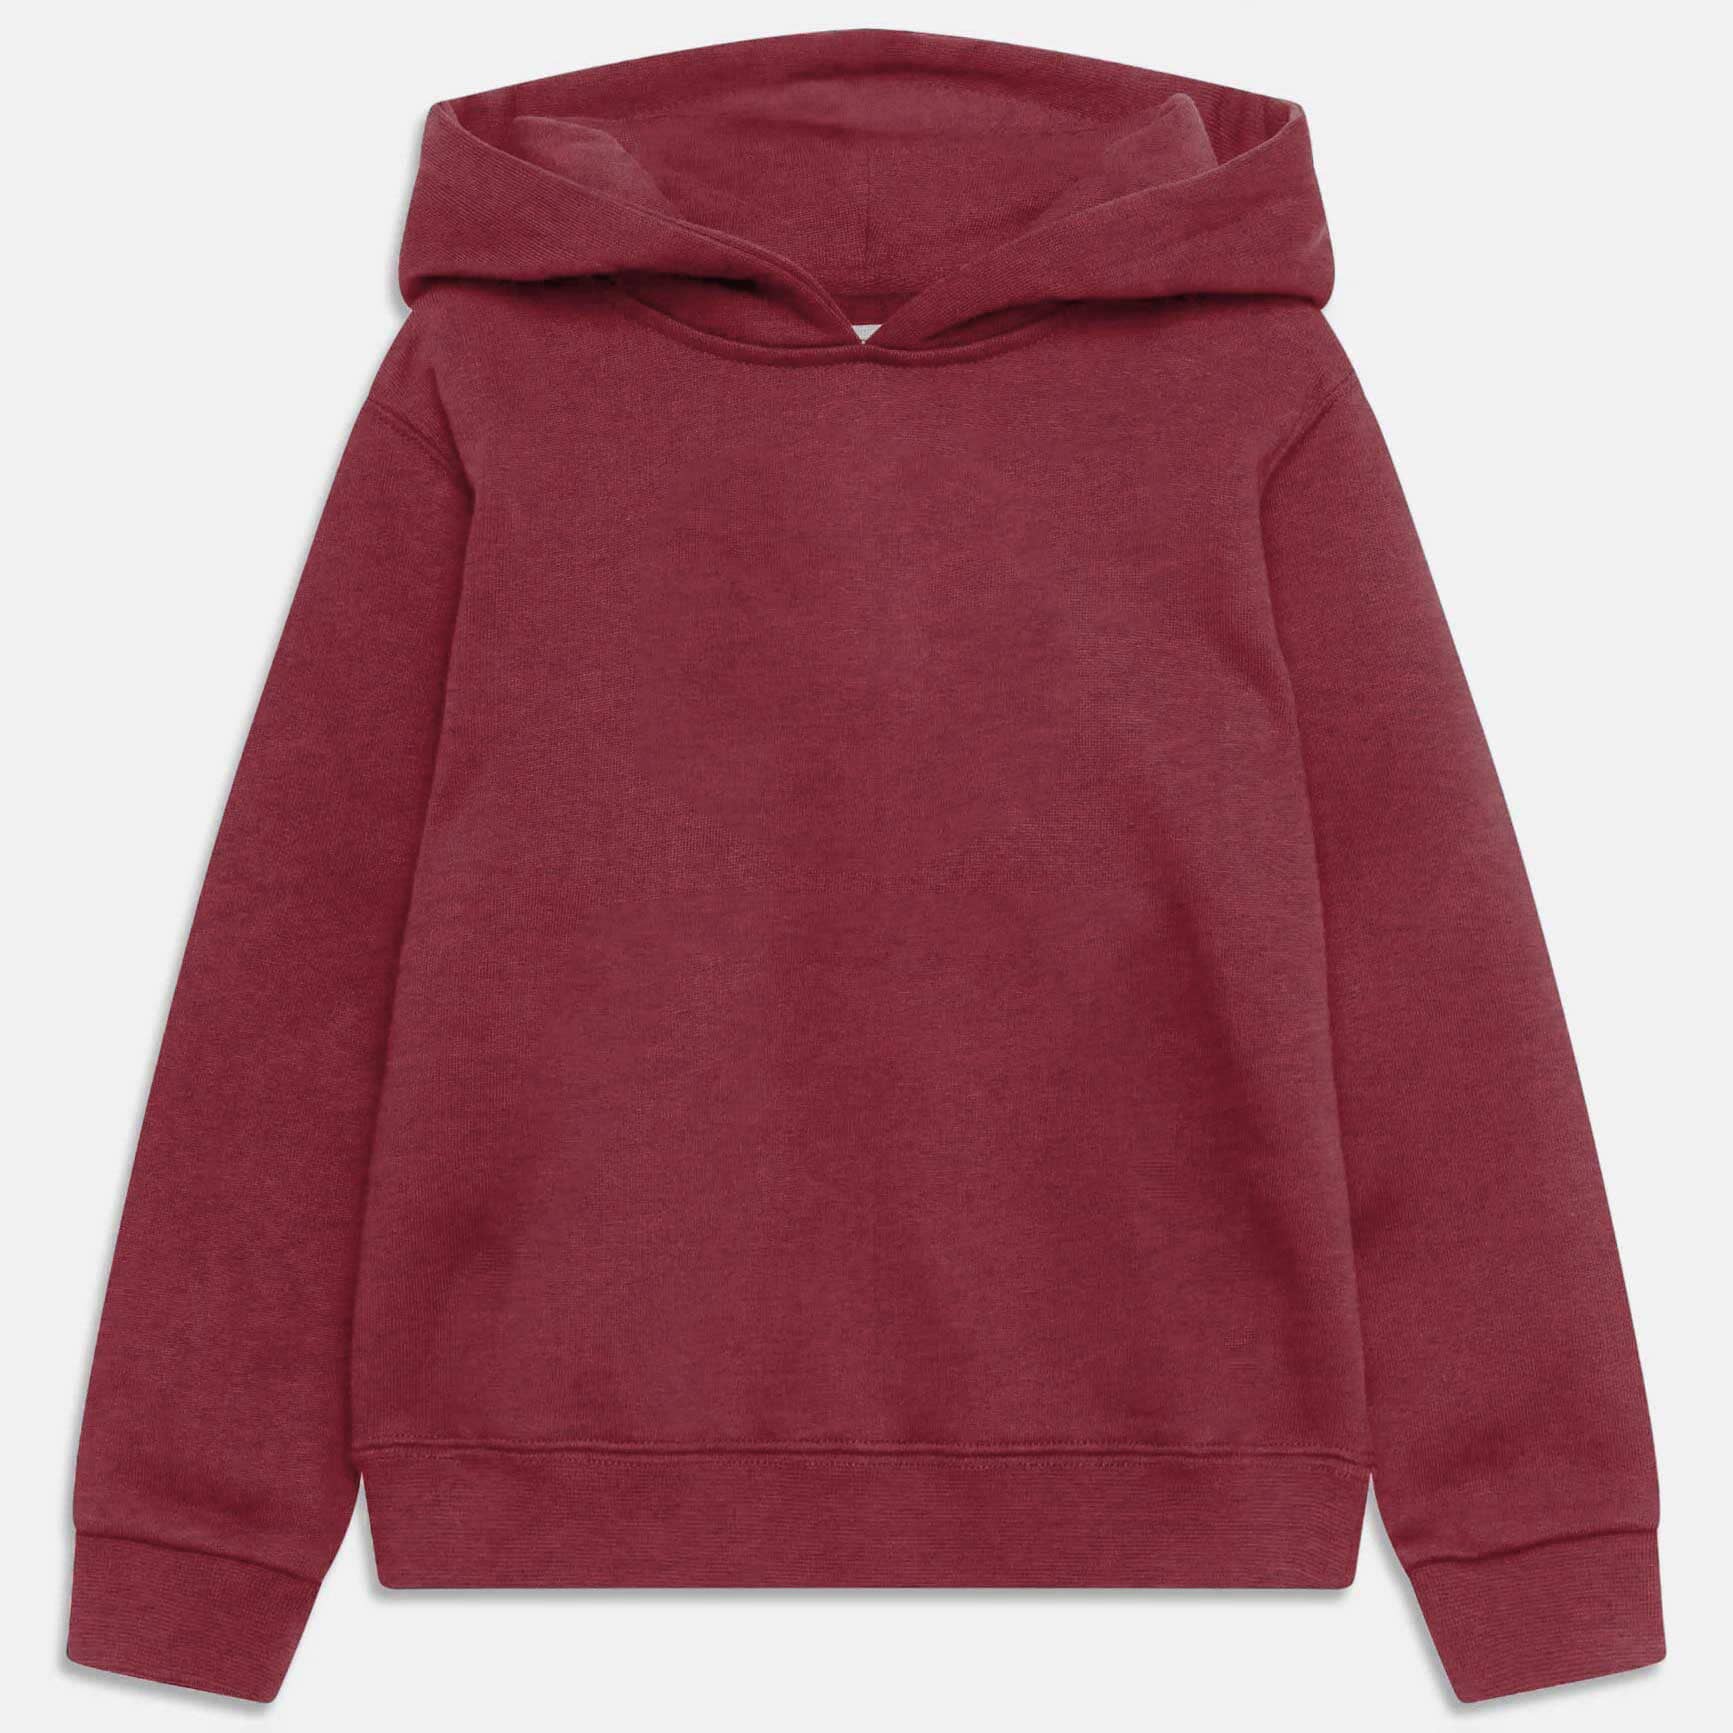 Rabbit Skins Kid's Solid Design Fleece Minor Fault Pullover Hoodie Boy's Pullover Hoodie Minhas Garments Brick Red 2 Years 